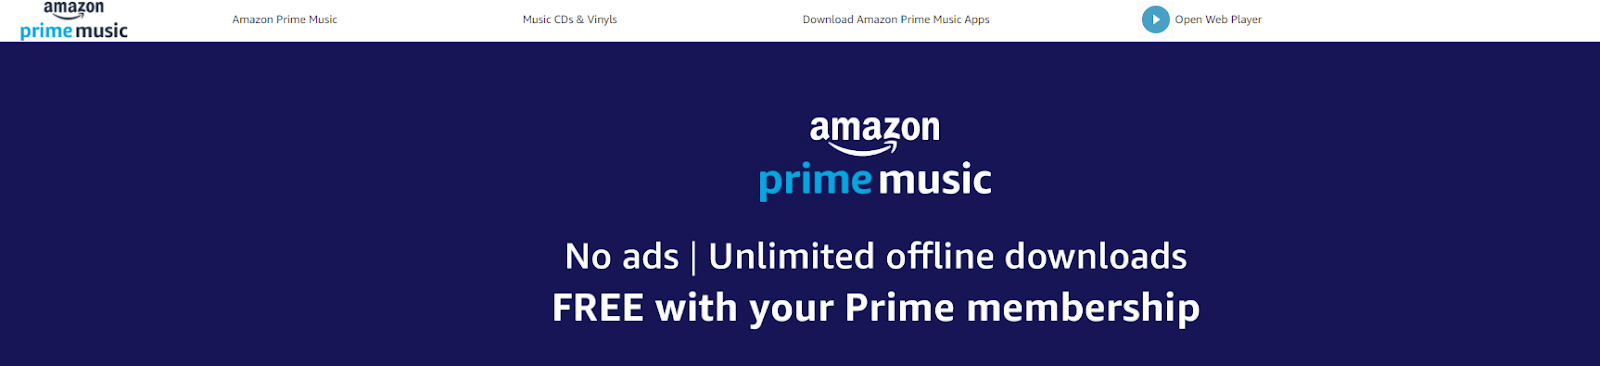 Nhạc Amazon Prime